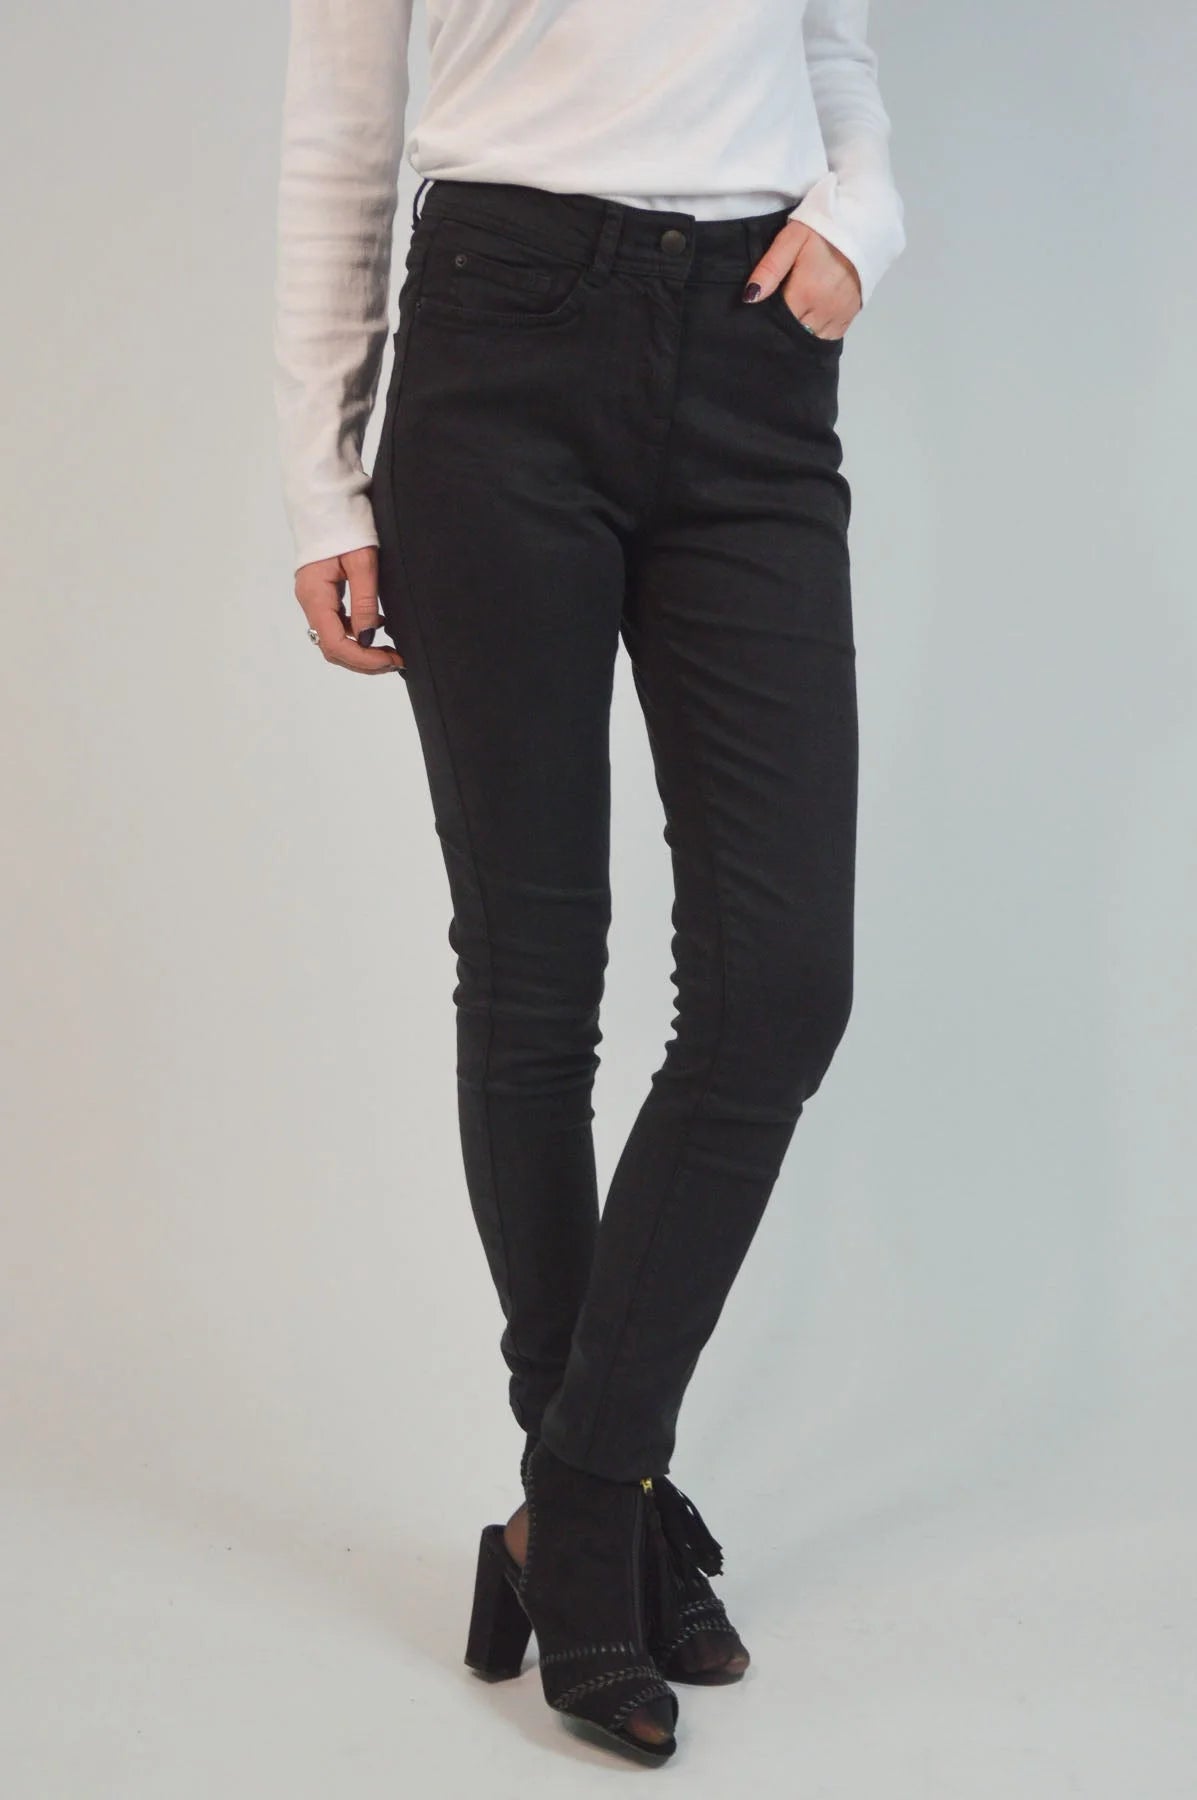 M&S Super Skinny Jeans Black / 6 / Reg